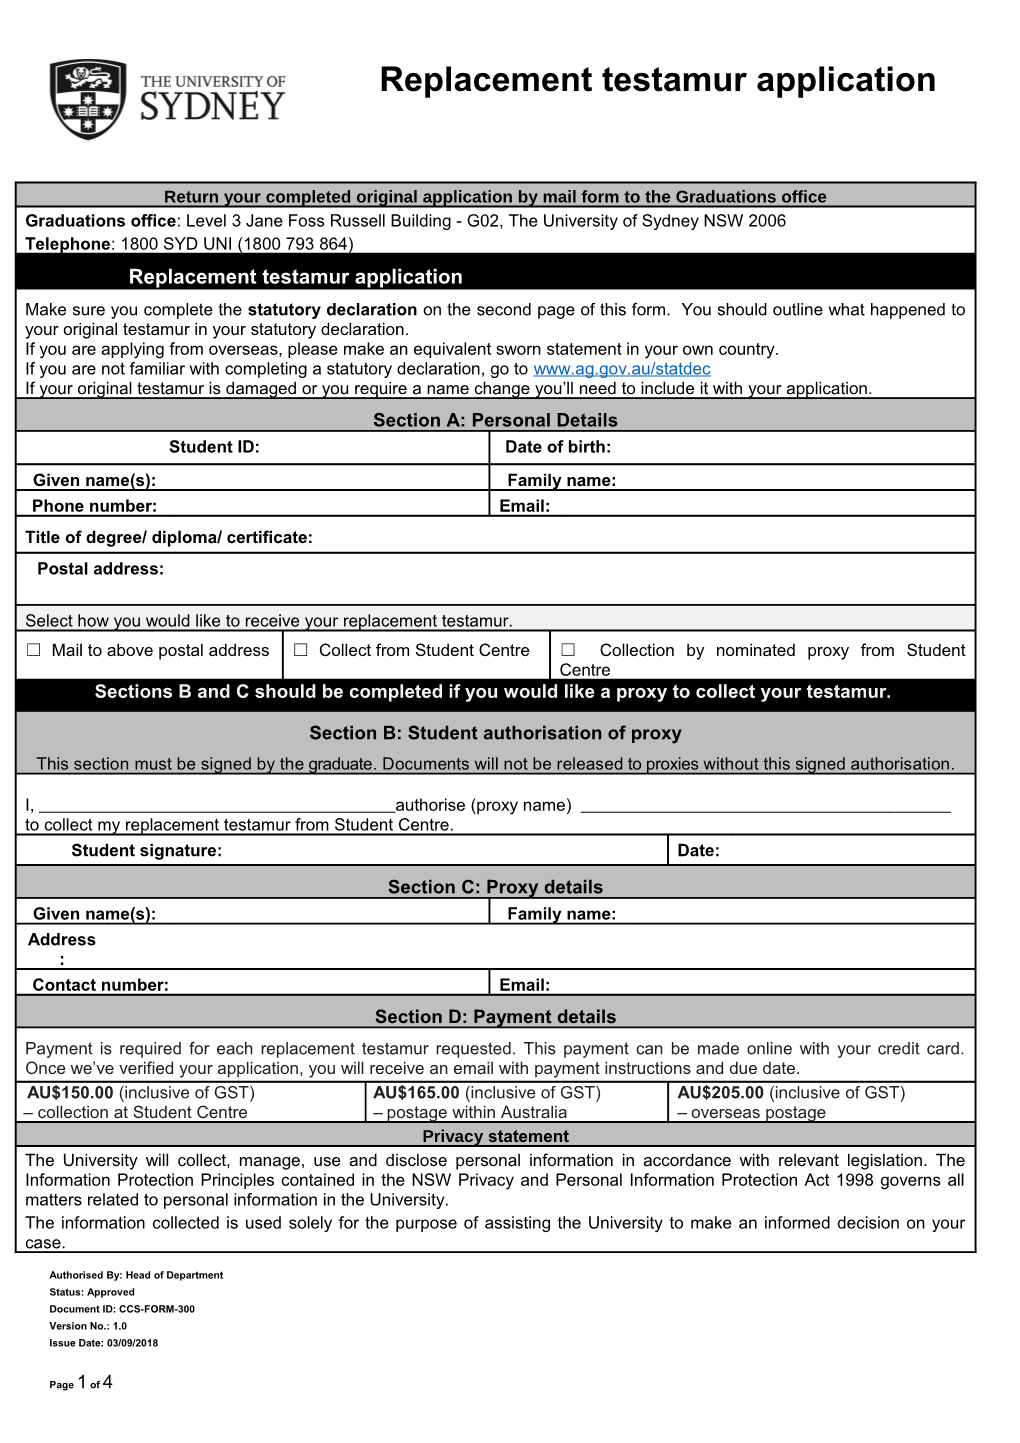 Replacement Testamur Application Form